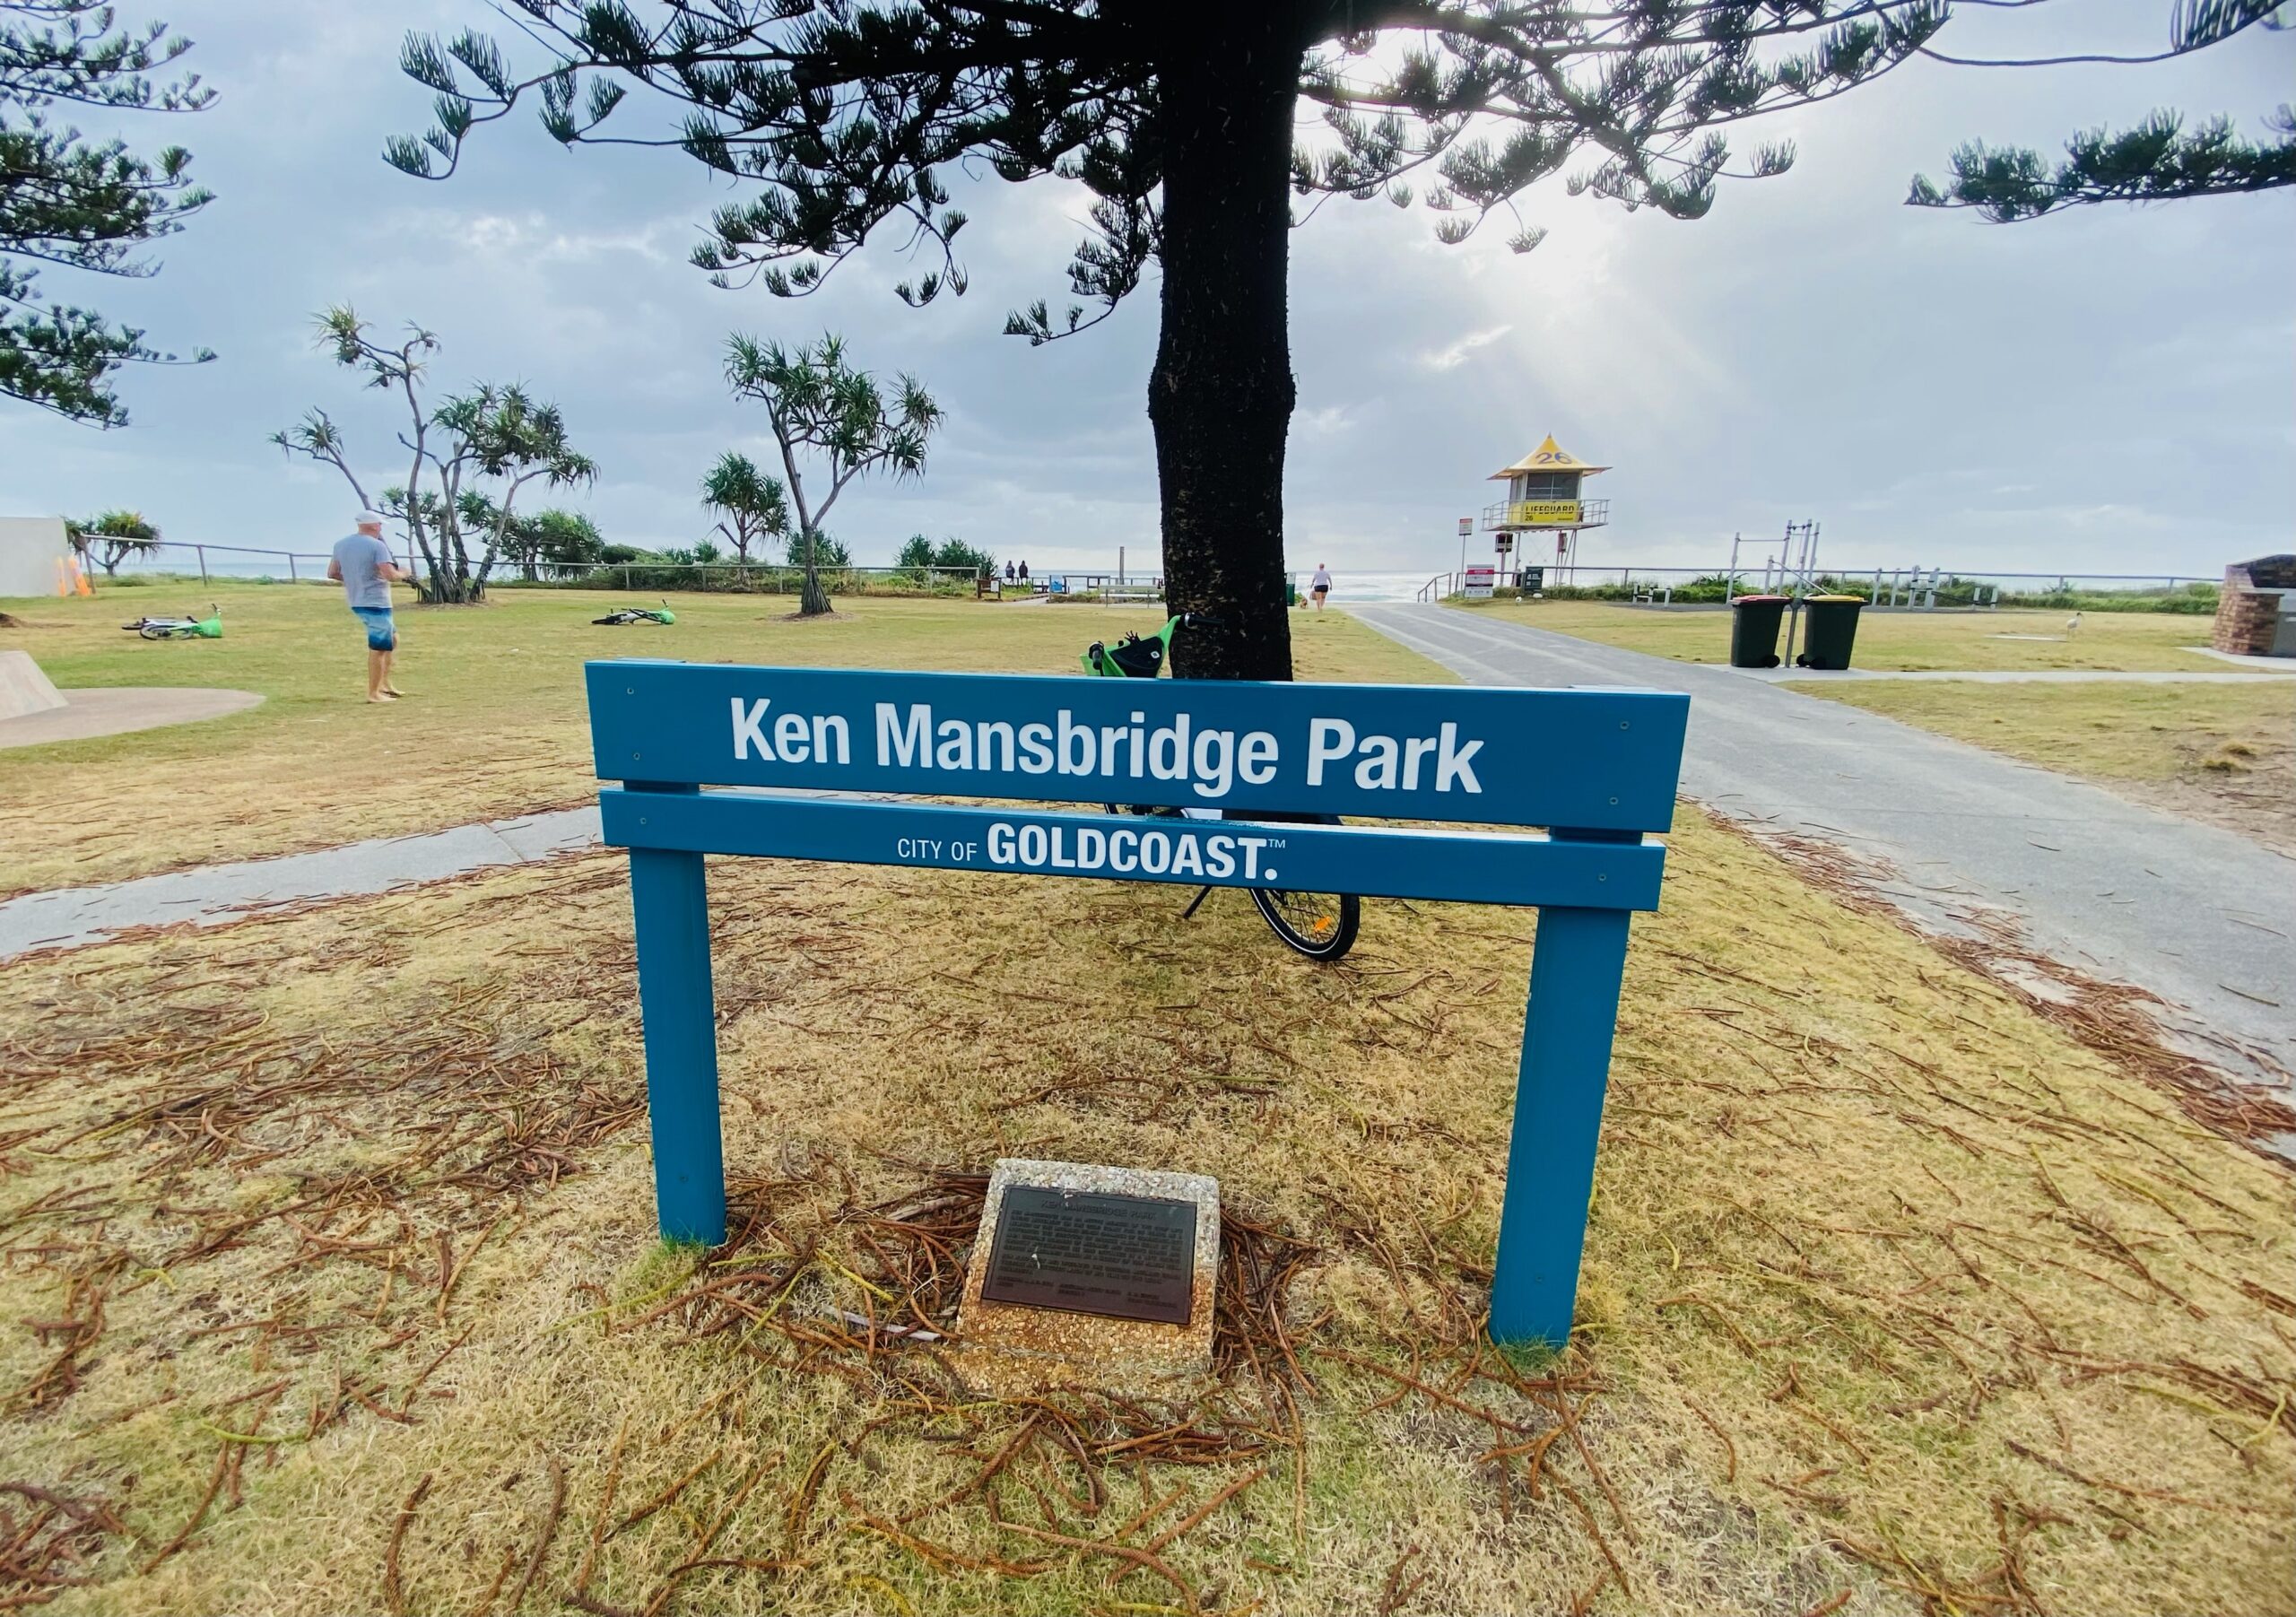 Ken Mansbridge Park